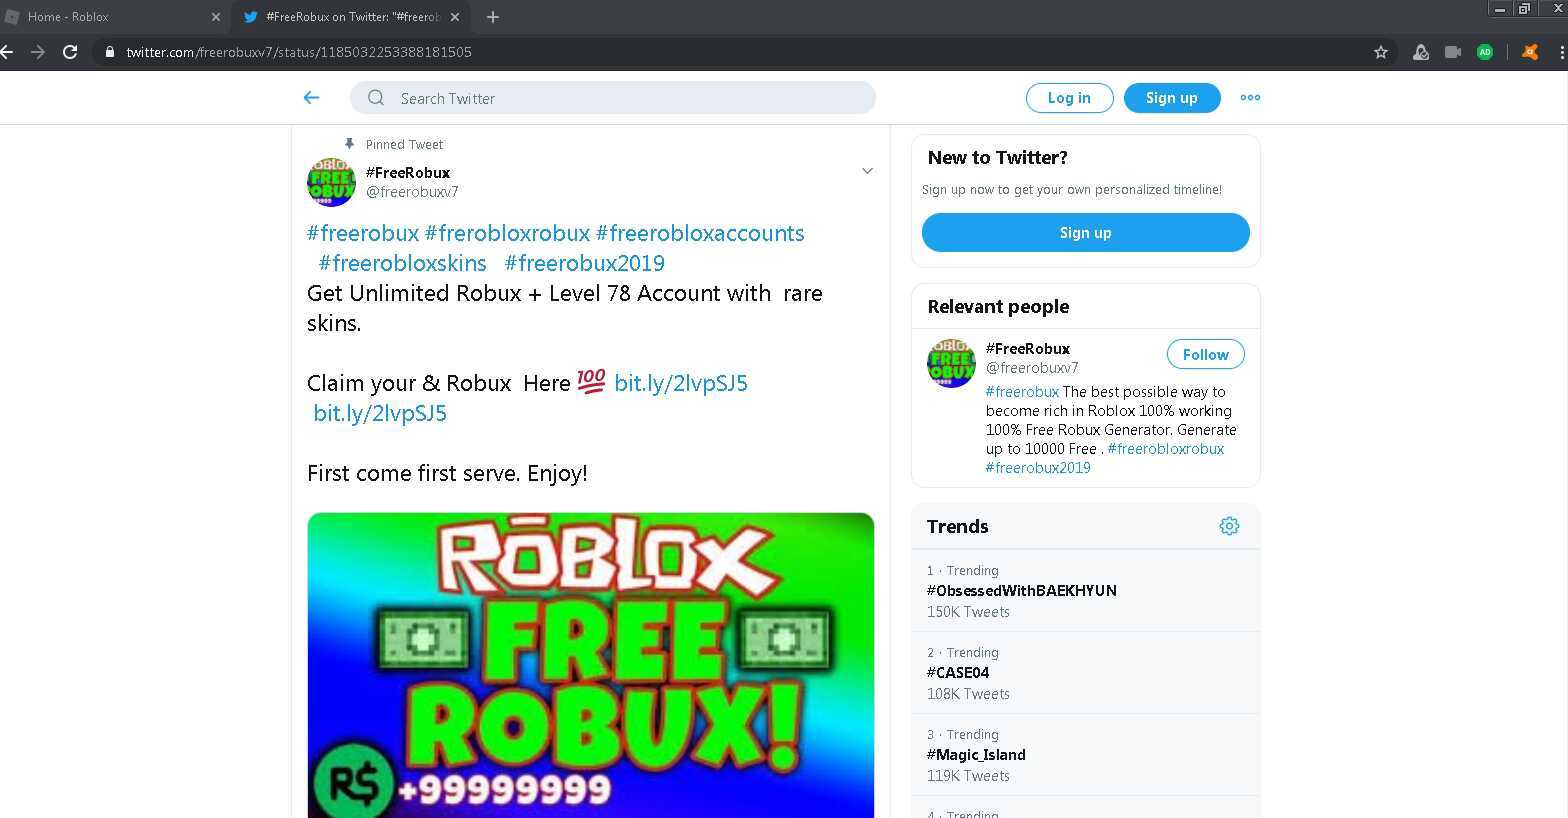 Free Robux Generator 2019 Ad